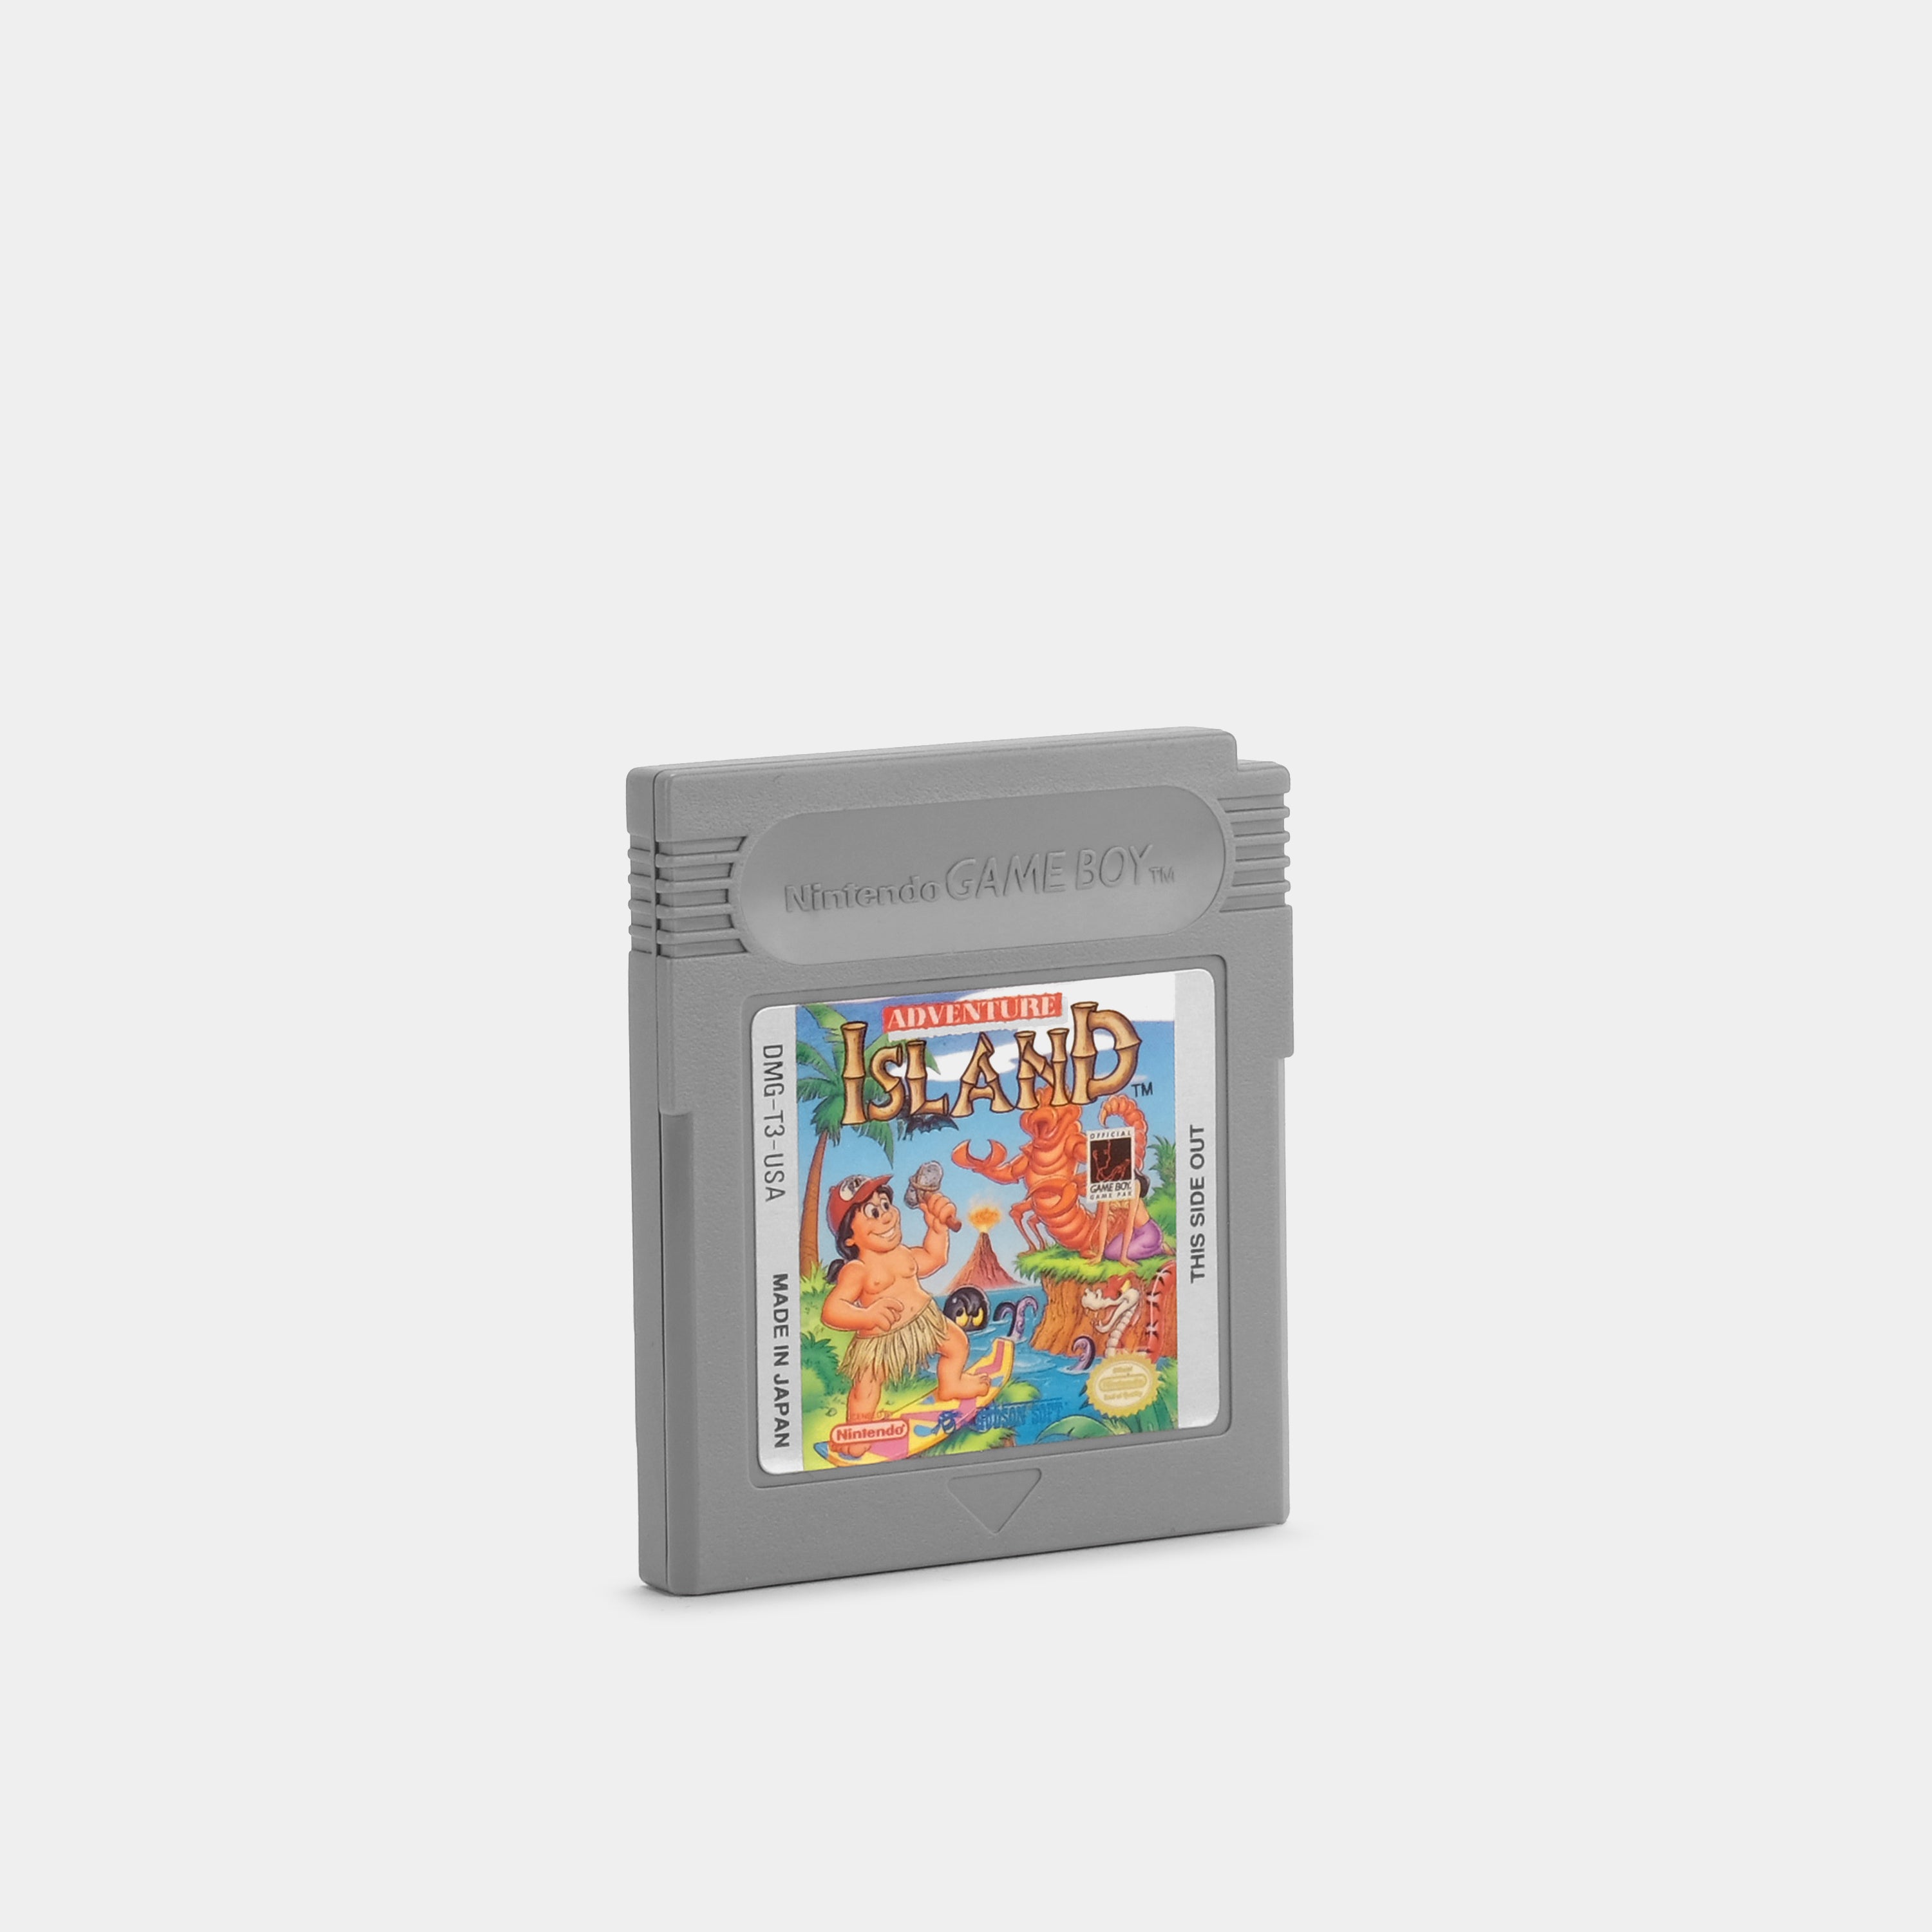 Adventure Island Game Boy Game